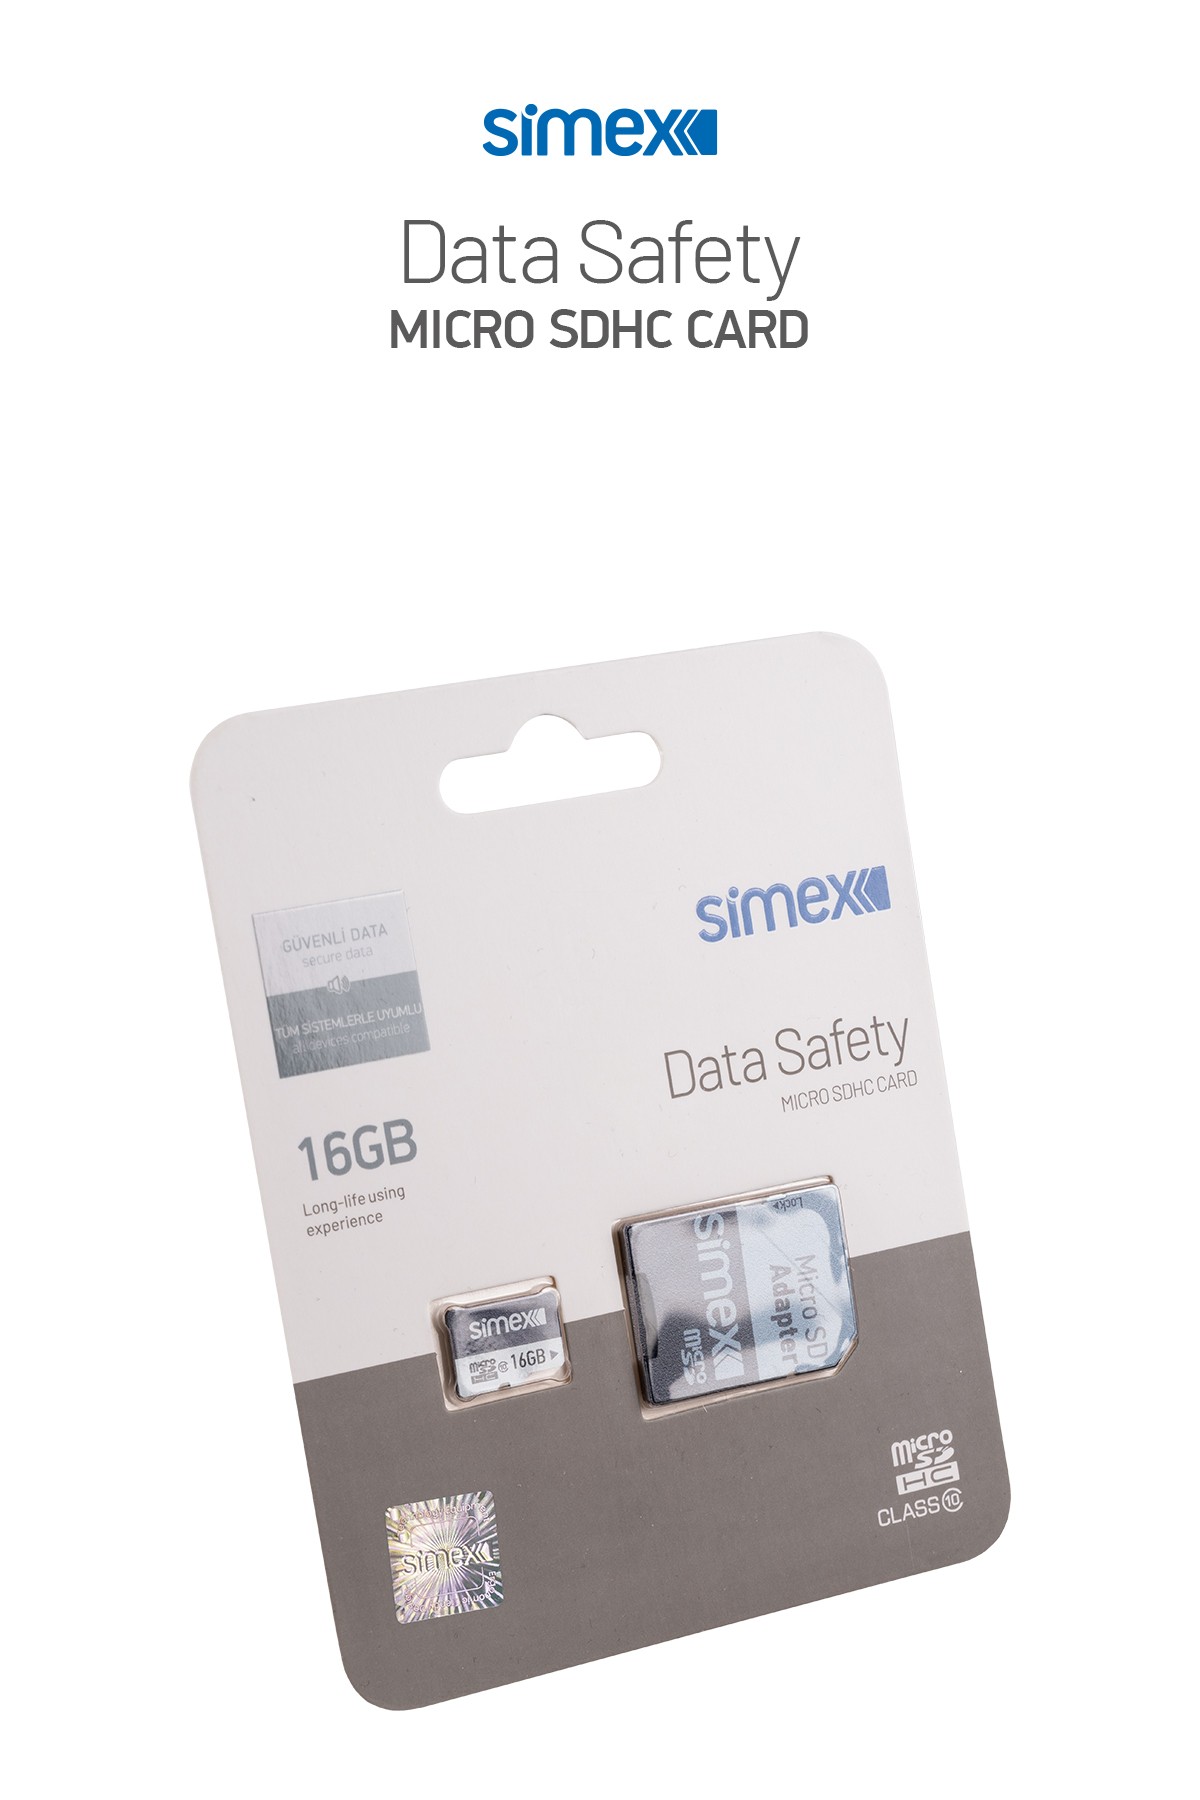 Simex SH-101 Data Safety Micro SD 16GB Hafıza Kartı